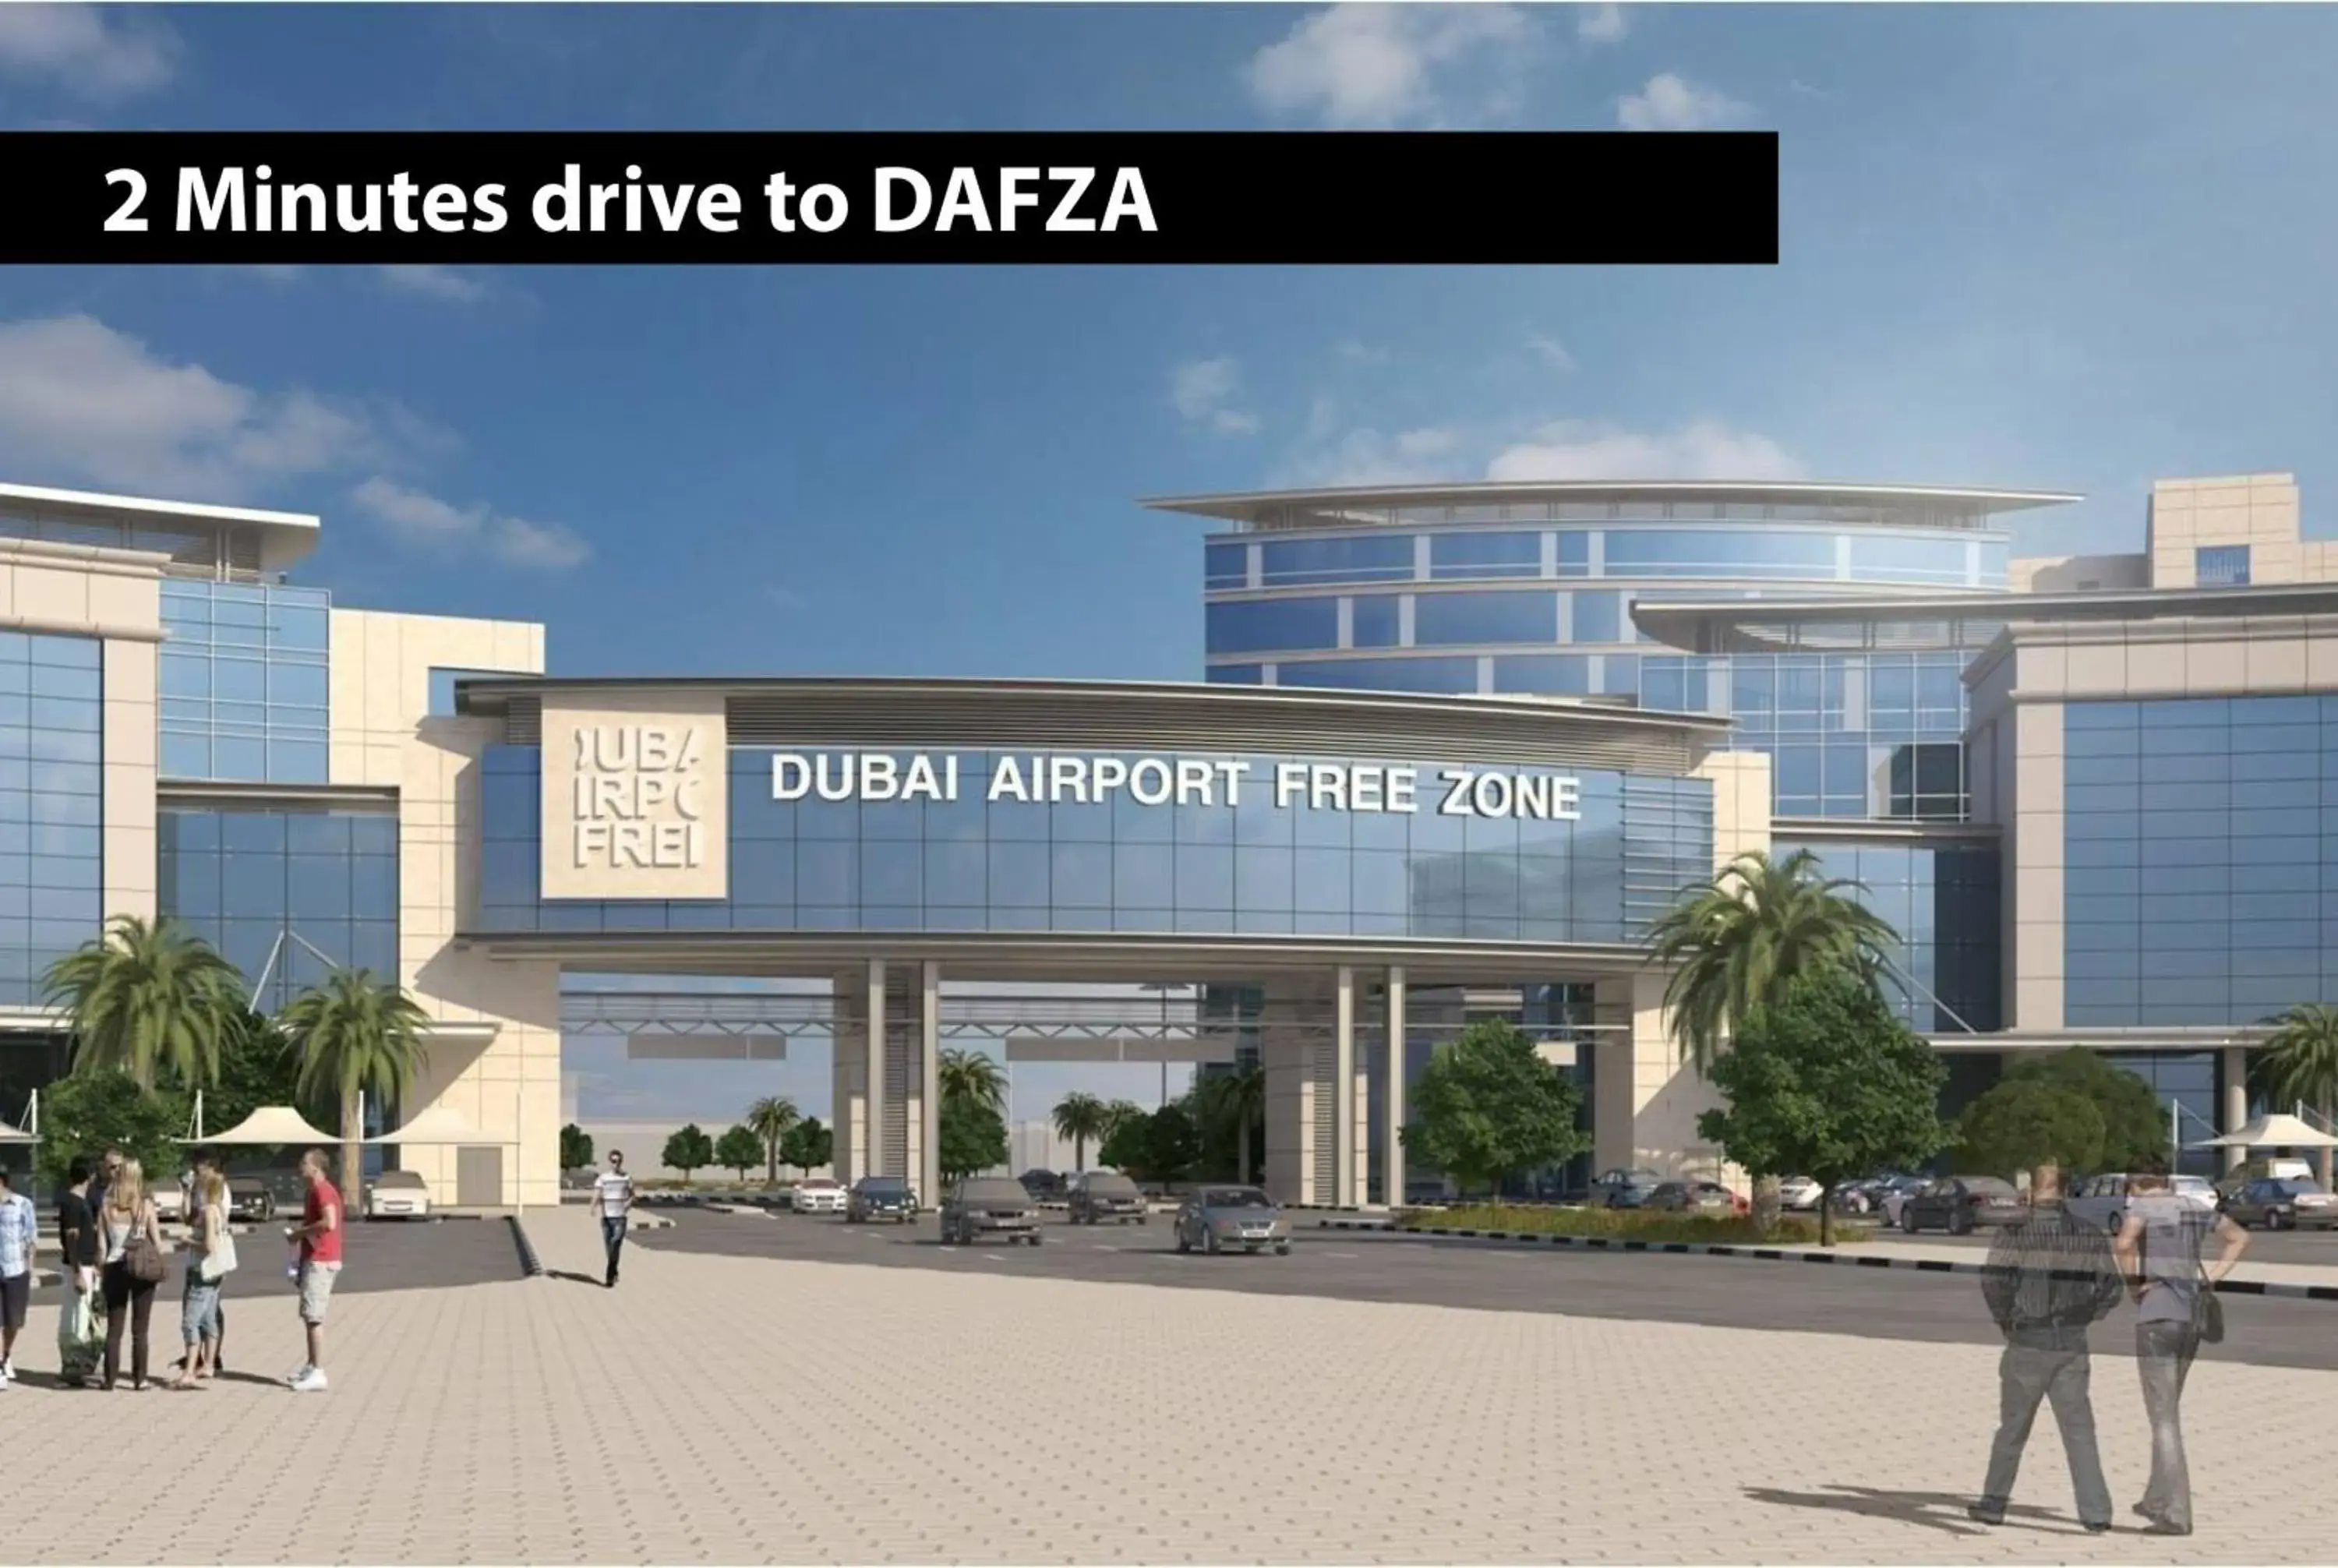 Nearby landmark in Fortune Plaza Hotel, Dubai Airport